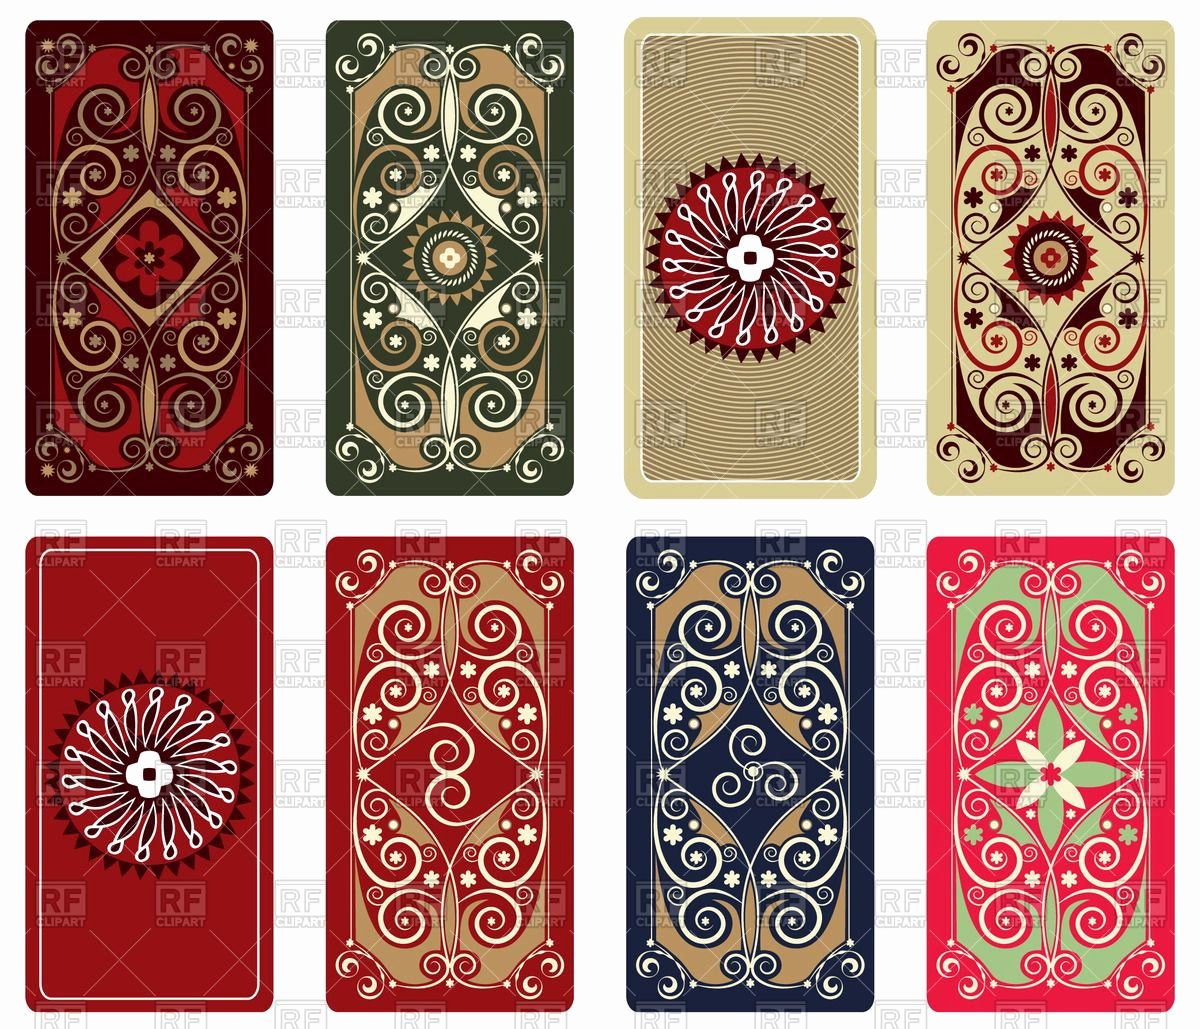 Playing Card Design Template Inspirational Pin by Karen Swartz On Tarot Pinterest